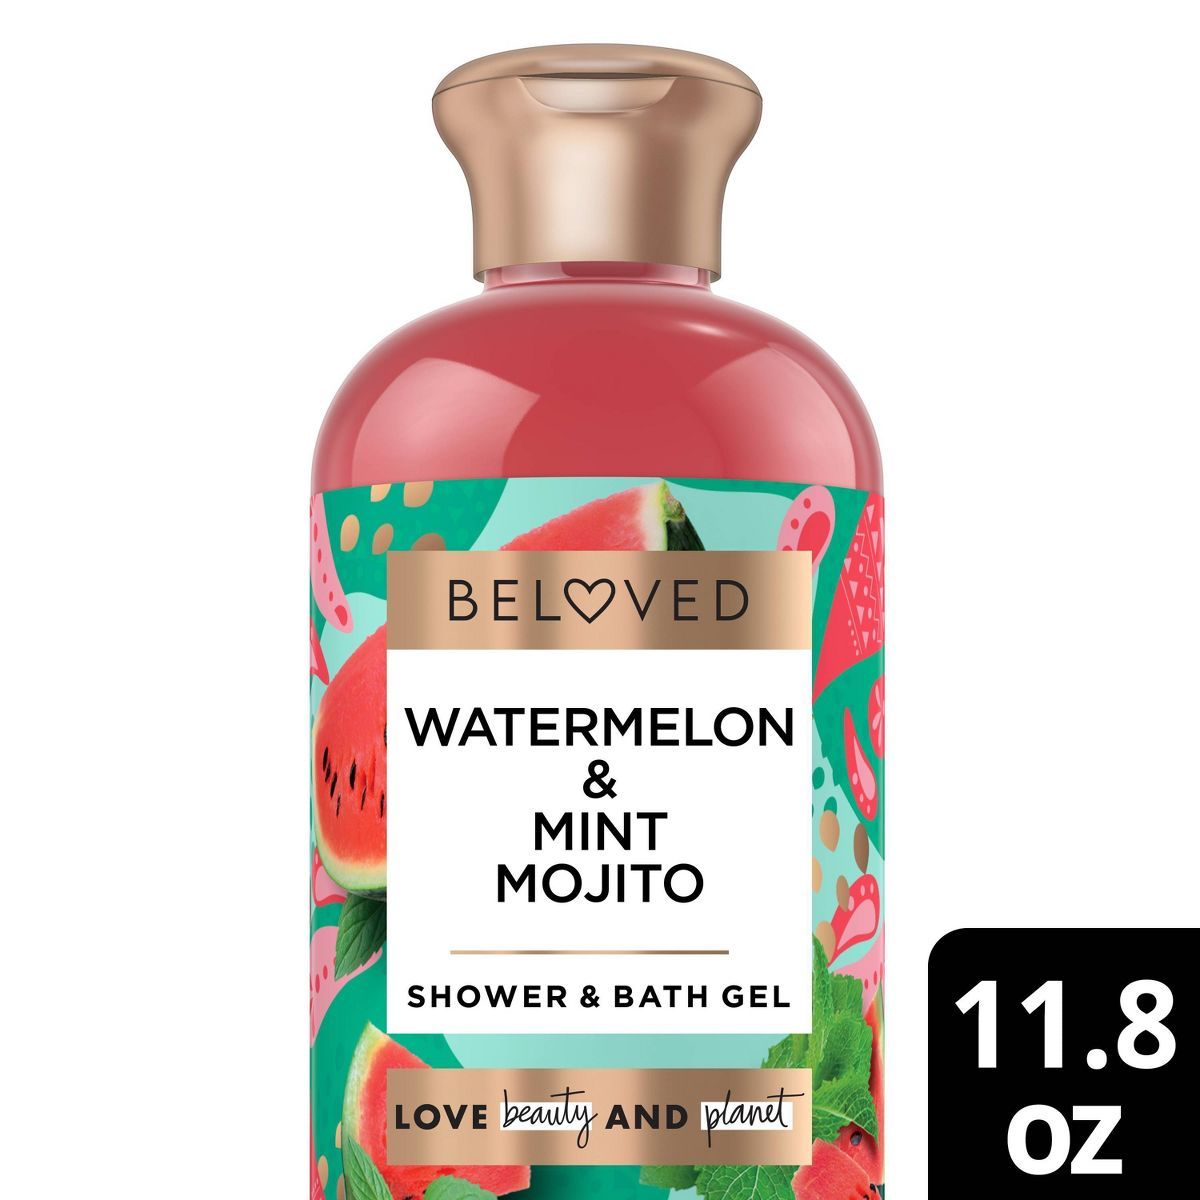 Beloved Watermelon & Mint Mojito Vegan Shower & Bath Gel - 11.8 fl oz | Target